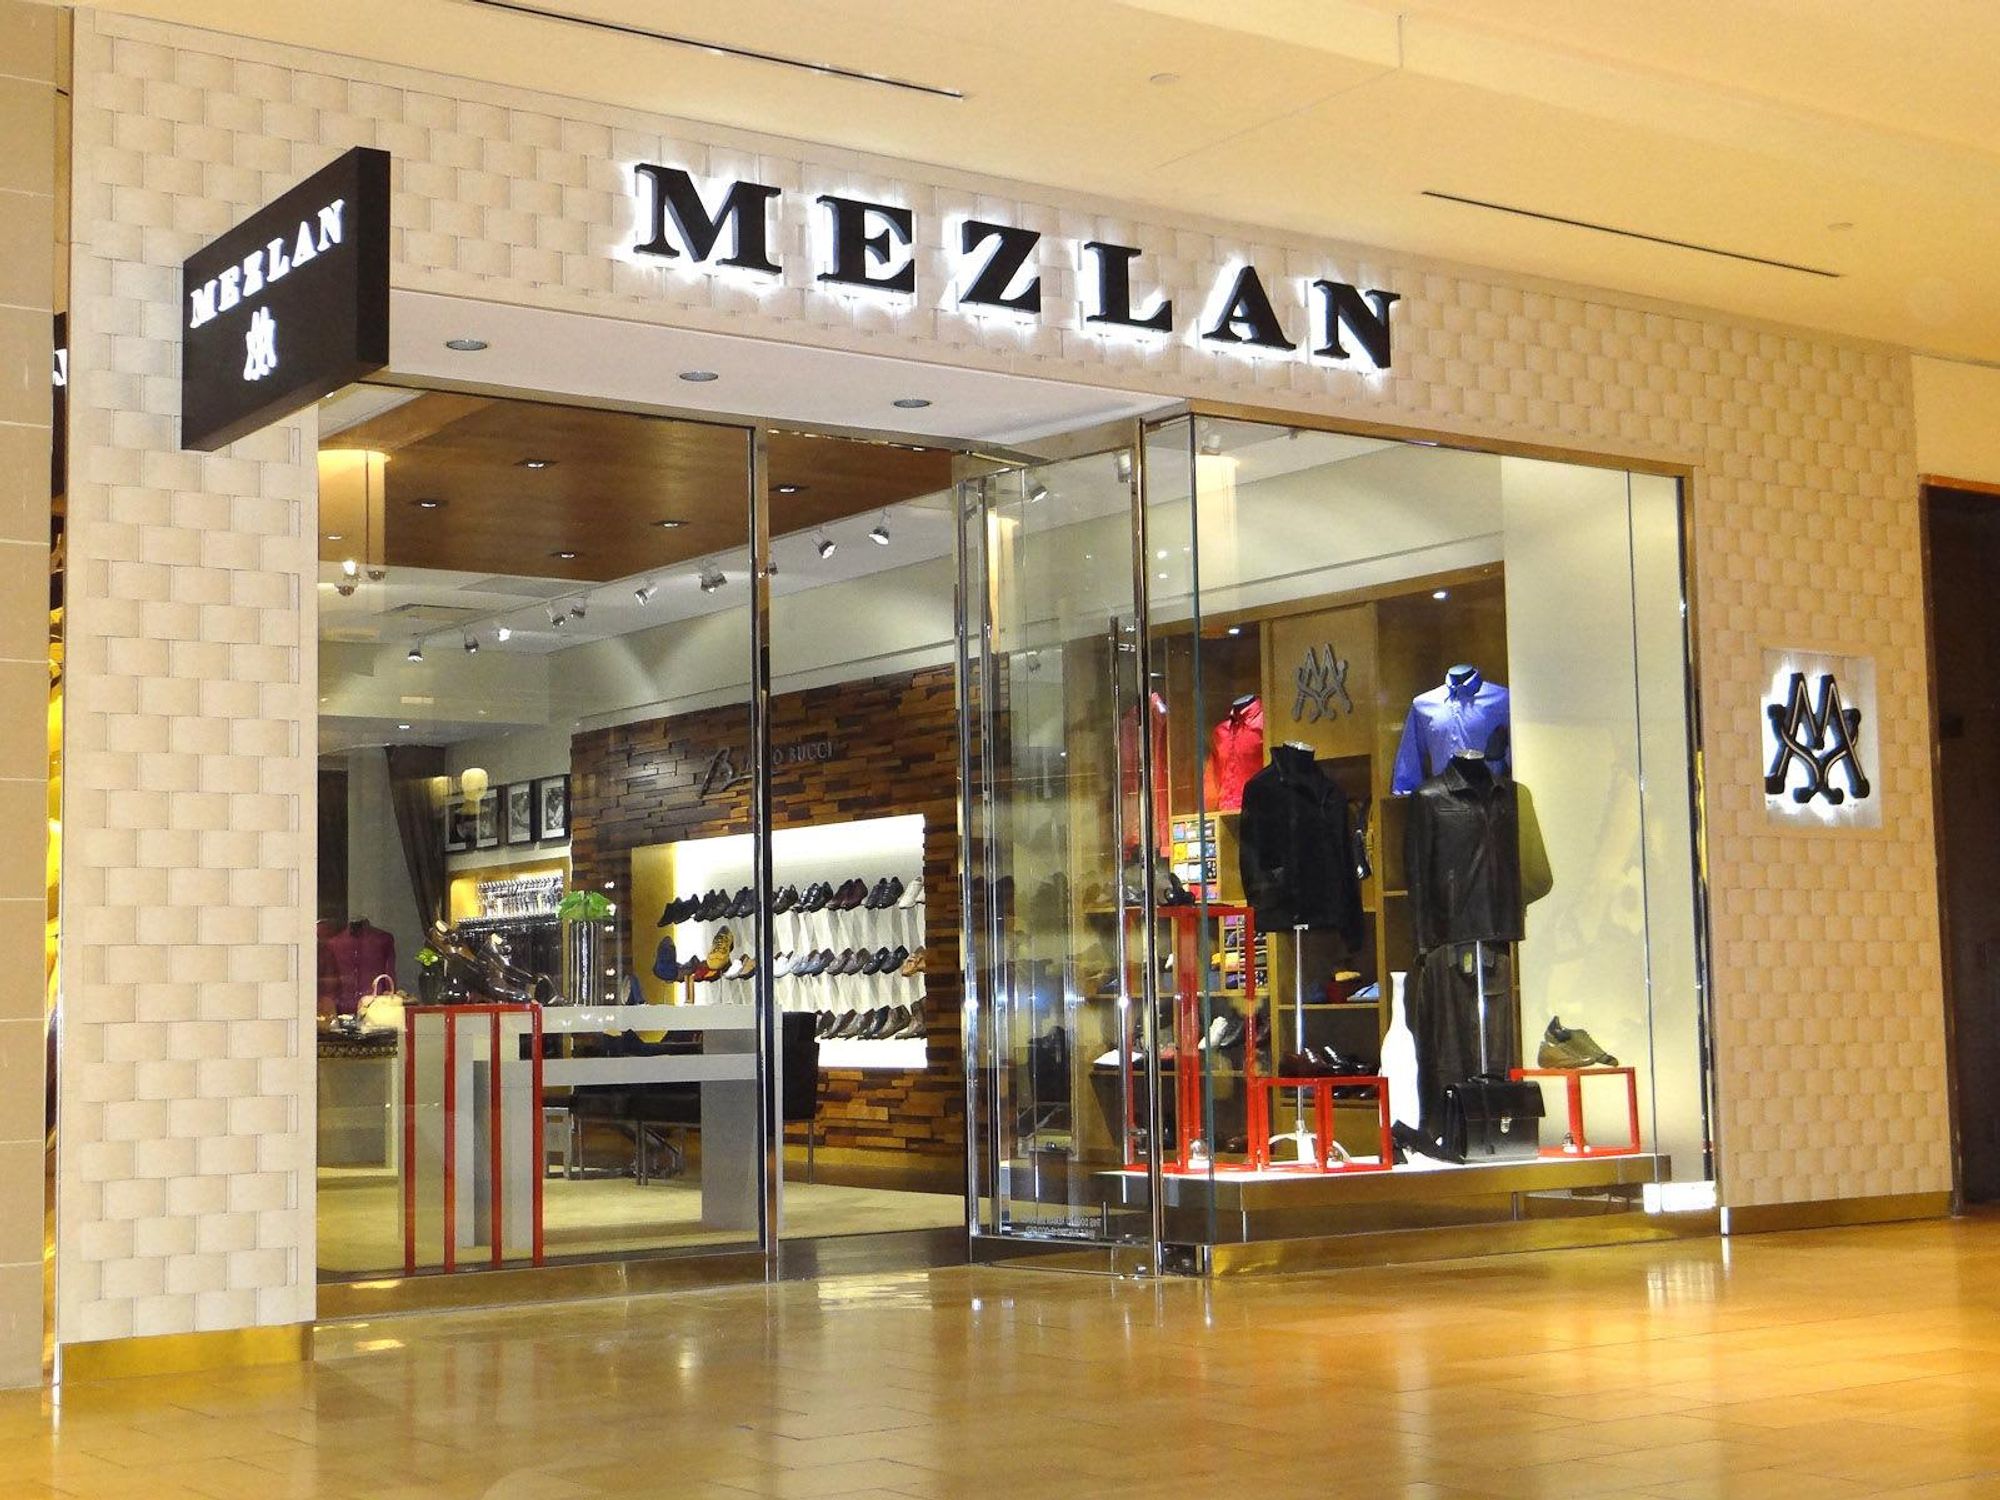 Mezlan men's clothing store storefront The Galleria